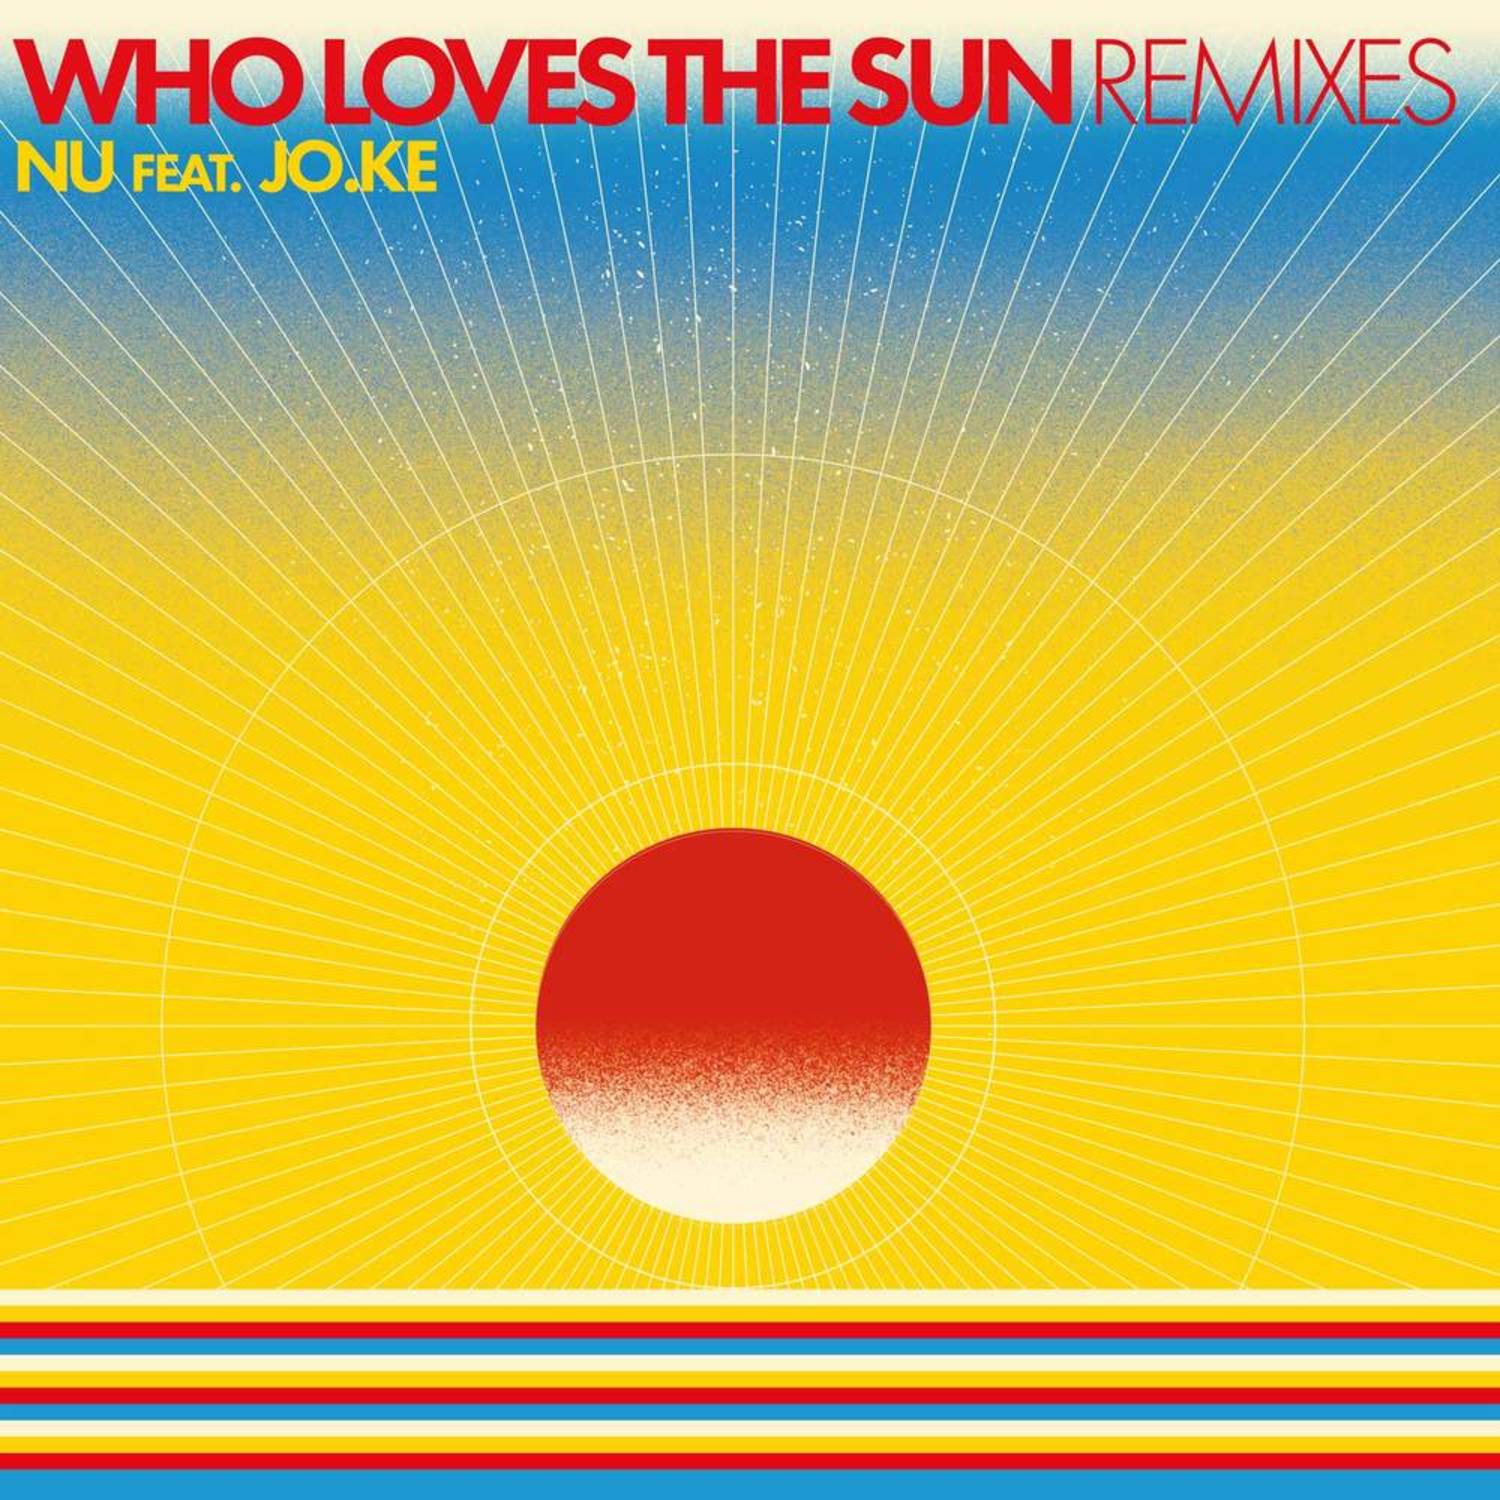 Nu feat. Jo.Ke - WHO LOVES THE SUN REMIXES 